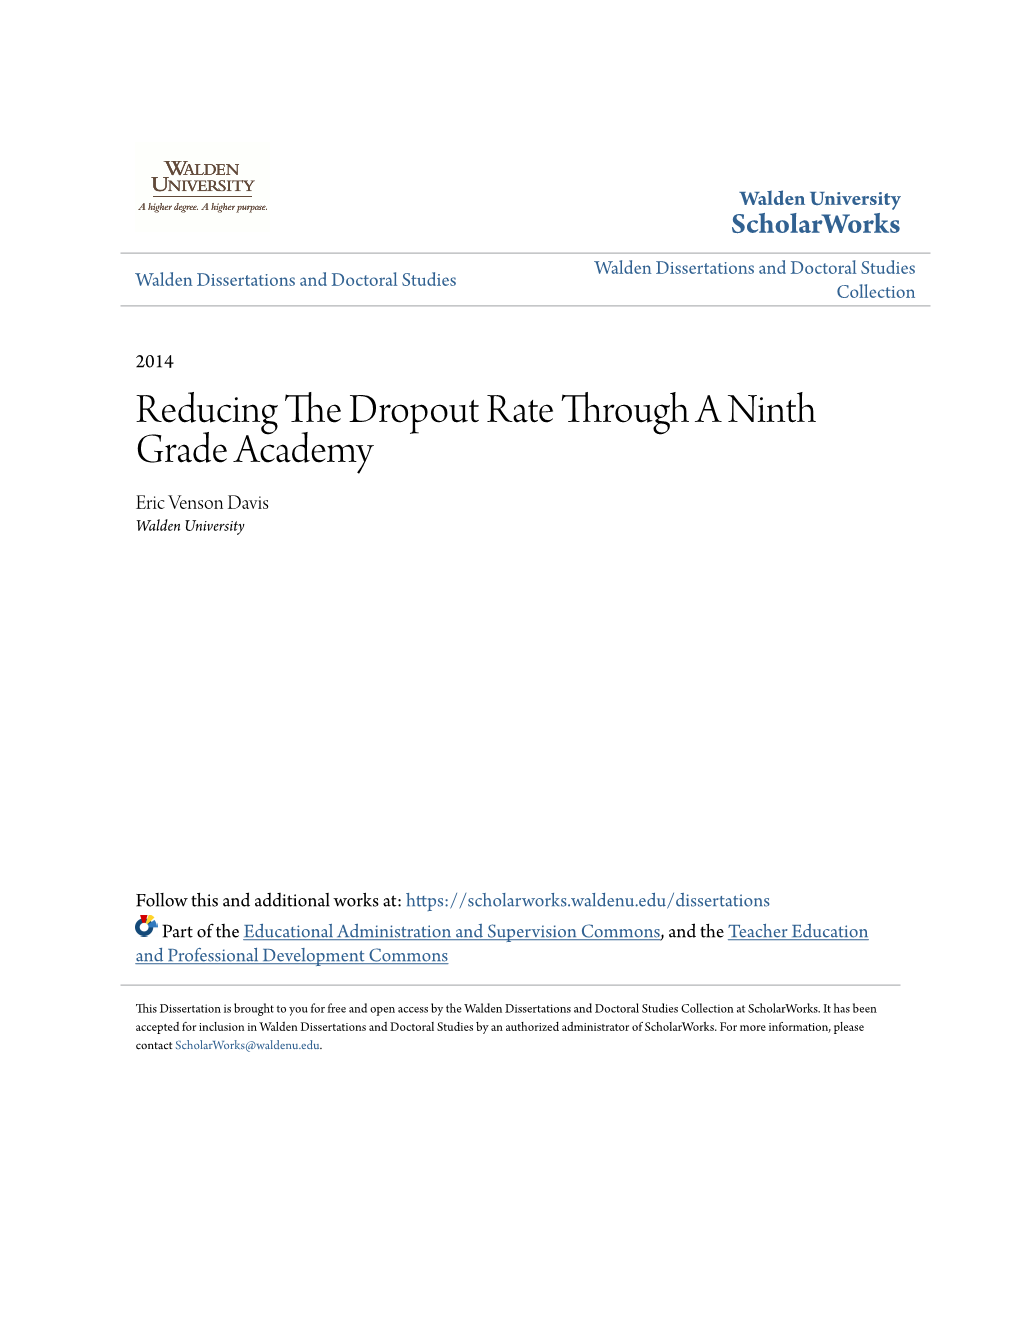 Reducing the Dropout Rate Through a Ninth Grade Academy Eric Venson Davis Walden University